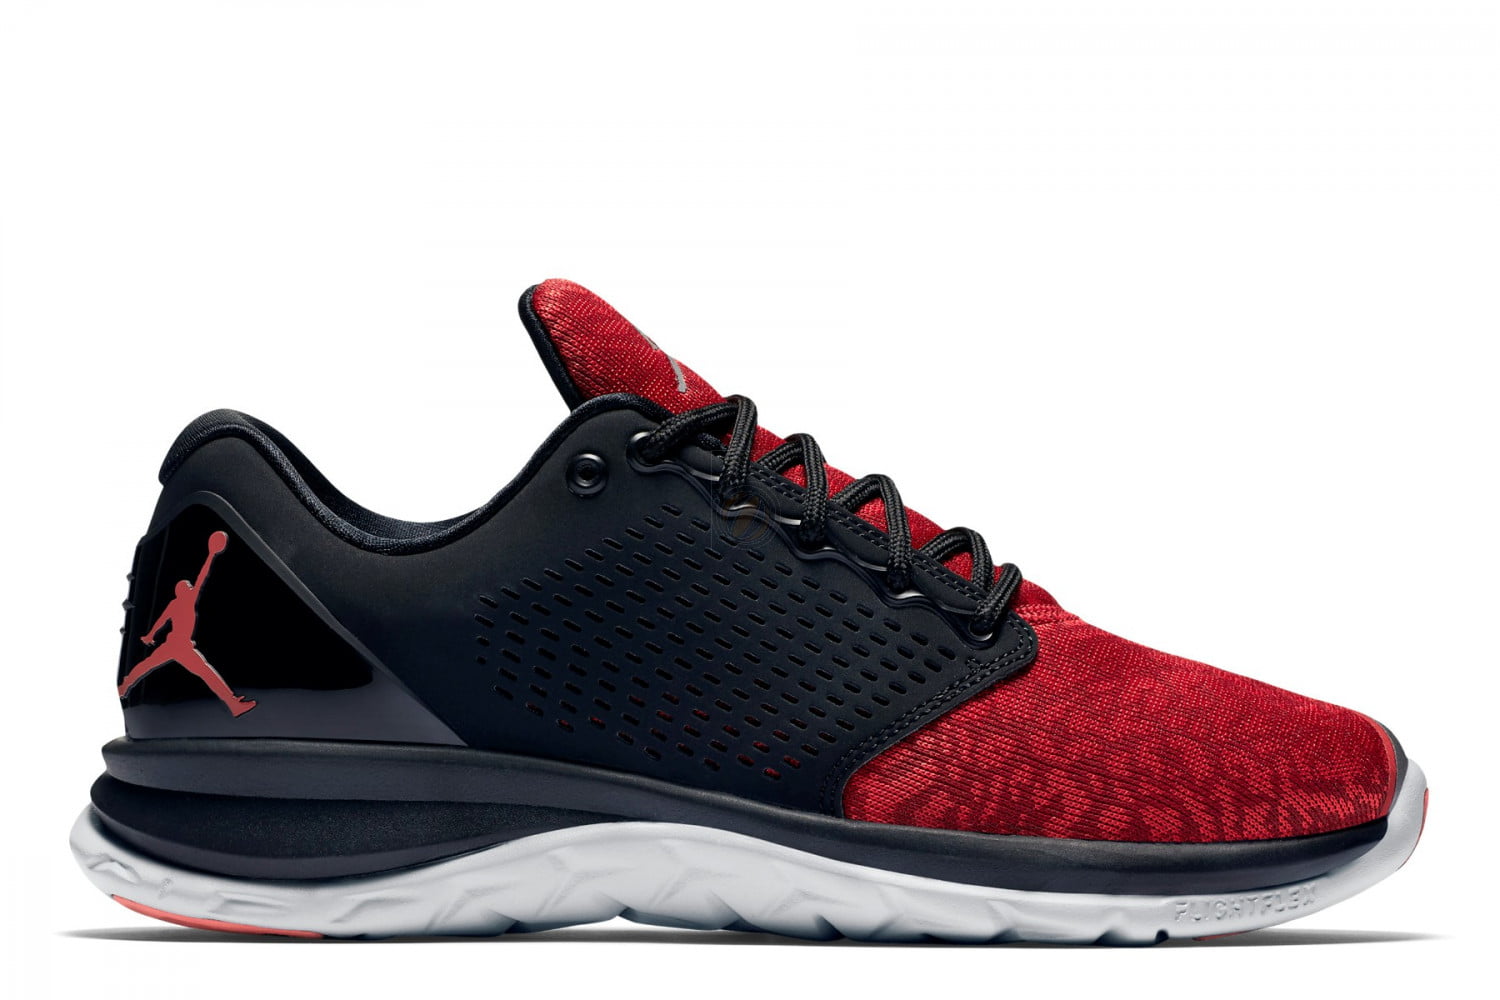 Nike Air Jordan Trainer ST Black/Gym Red Men's Training Shoes Size 13 ...